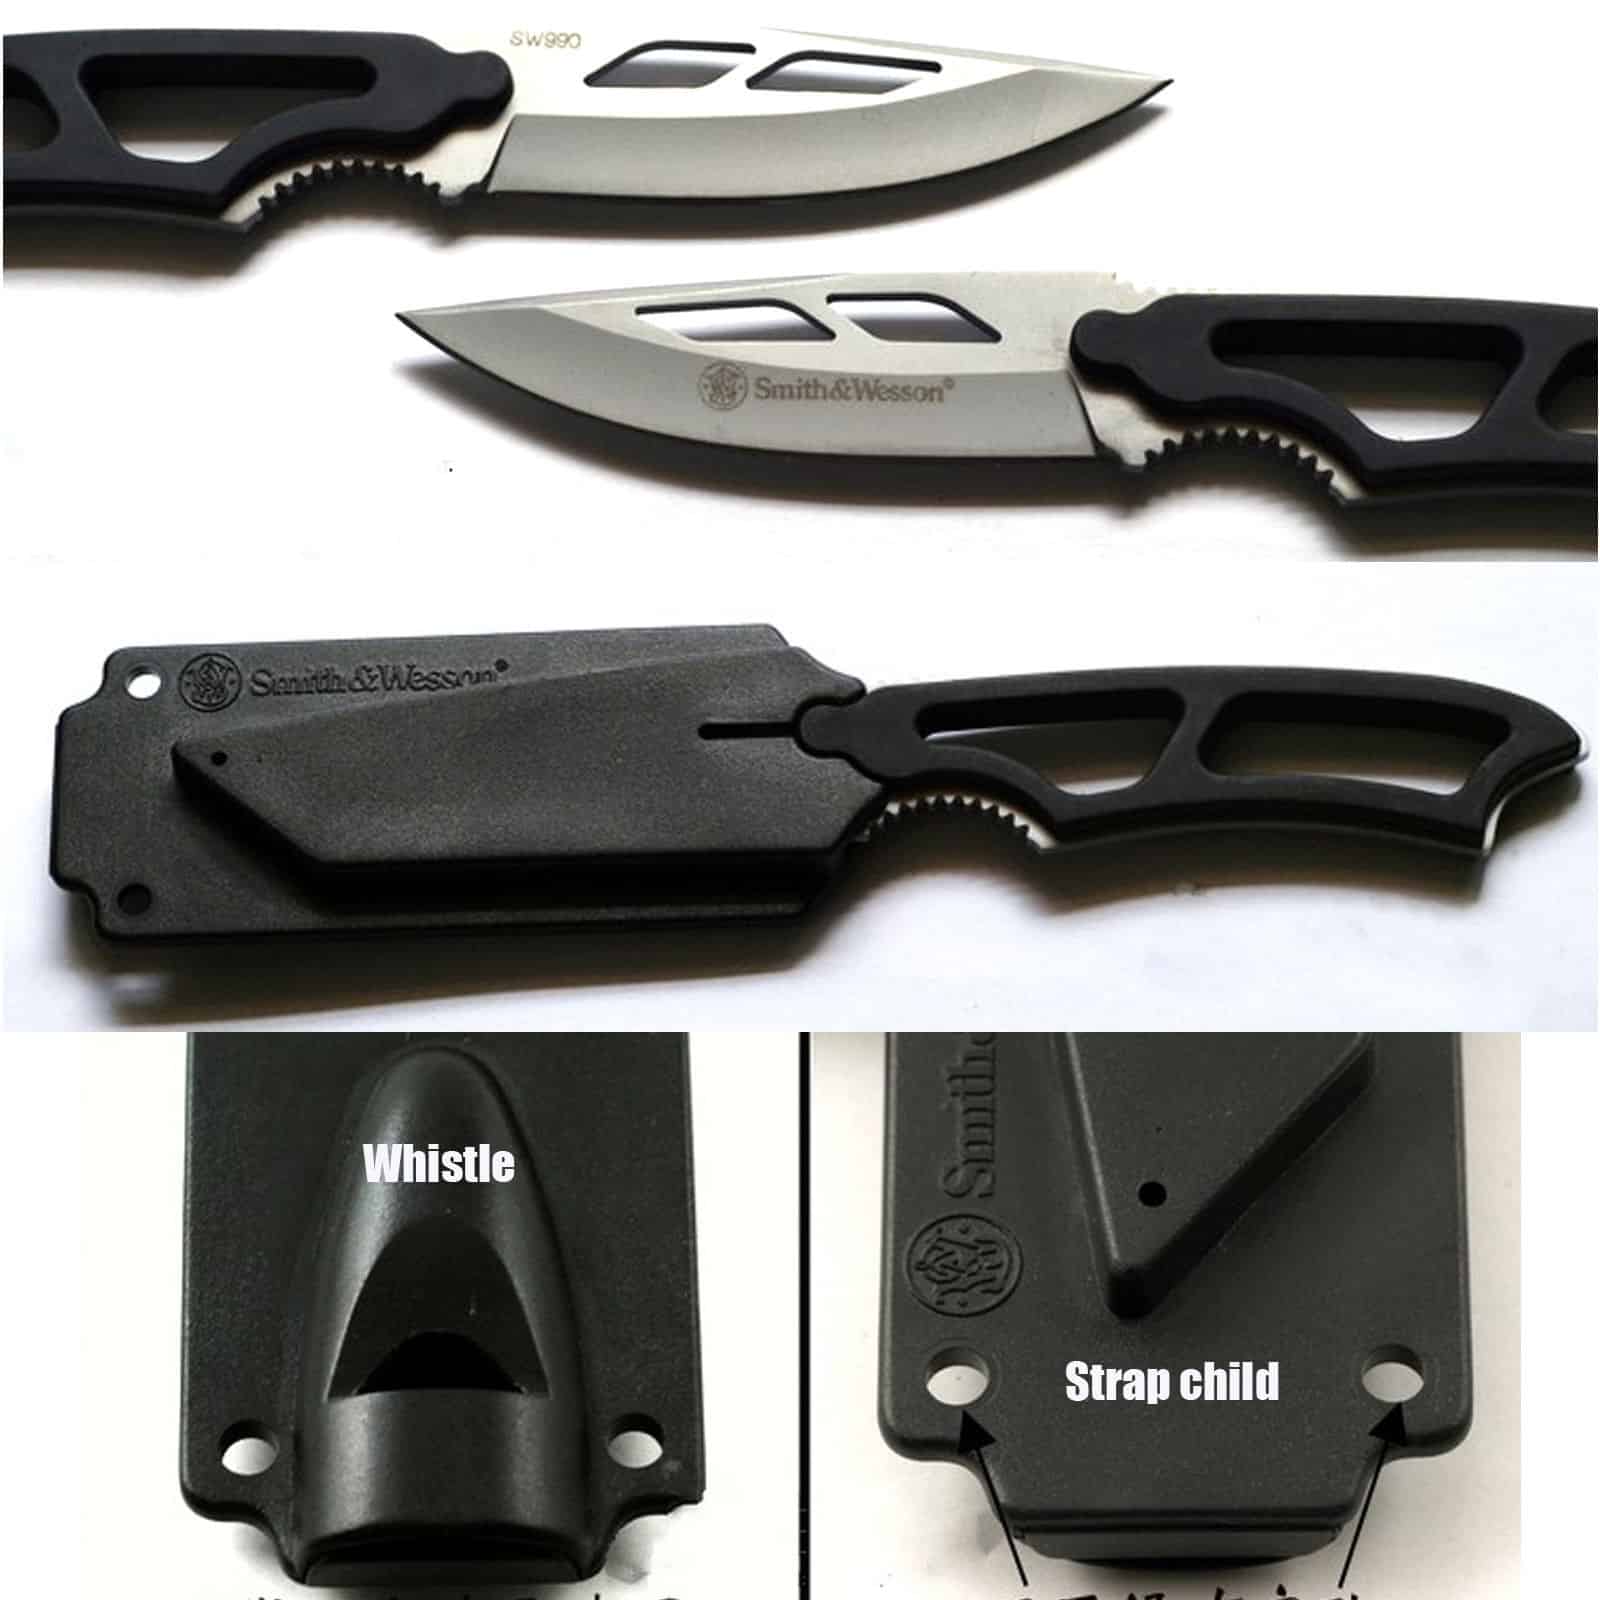 Smith & Wesson (SW990 / 212408) Neck Knife ab günstigen 4,38 Euro inkl. Porto (Preisvergleich: ~25 Euro)!